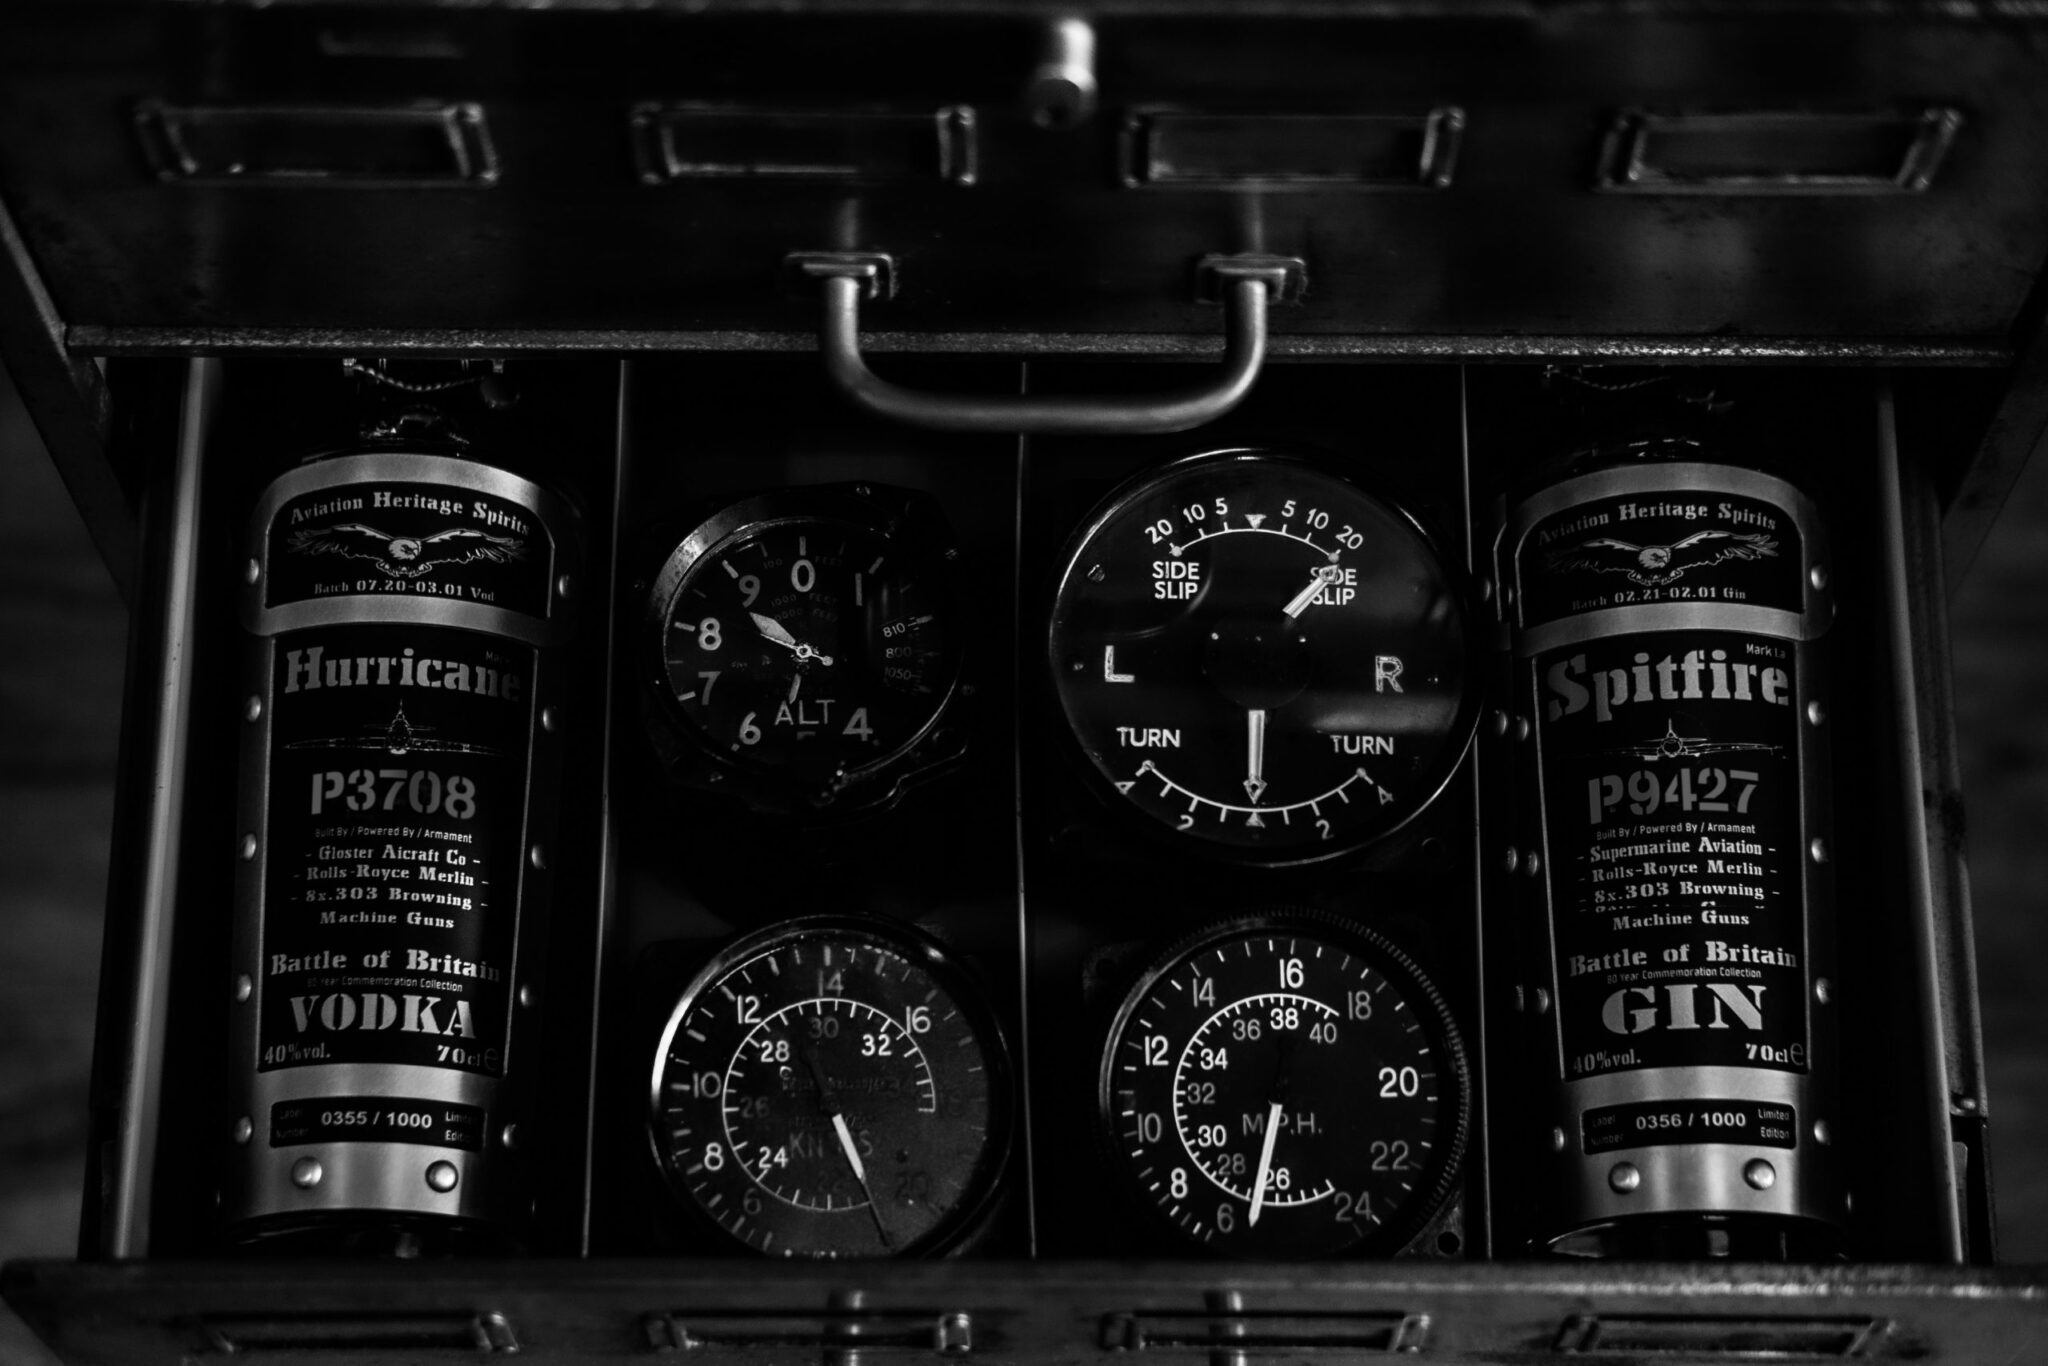 Bottle of Hurricane vodka and bottle of Spitfire gin alongside aircraft dials